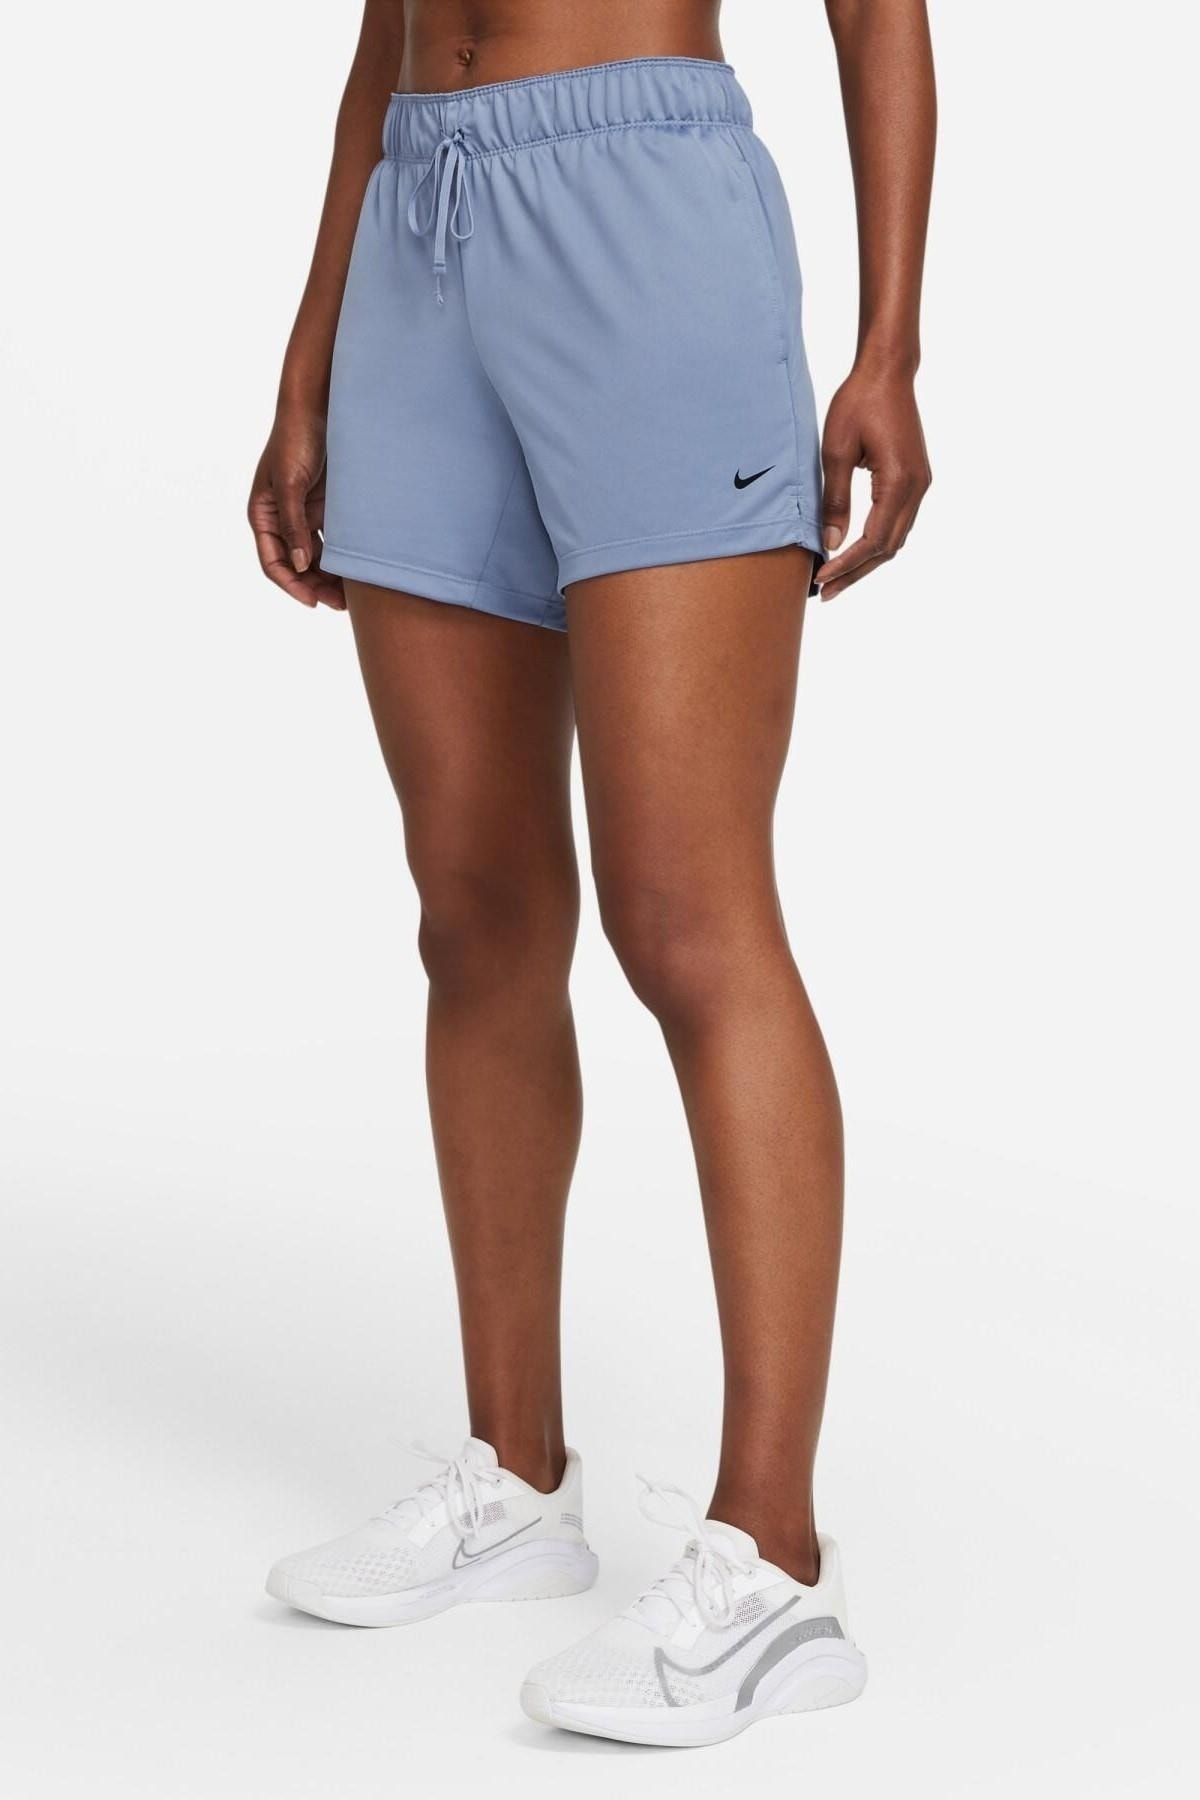 Nike Dri-fıt Attack Shorts Kısa Kadın Şort